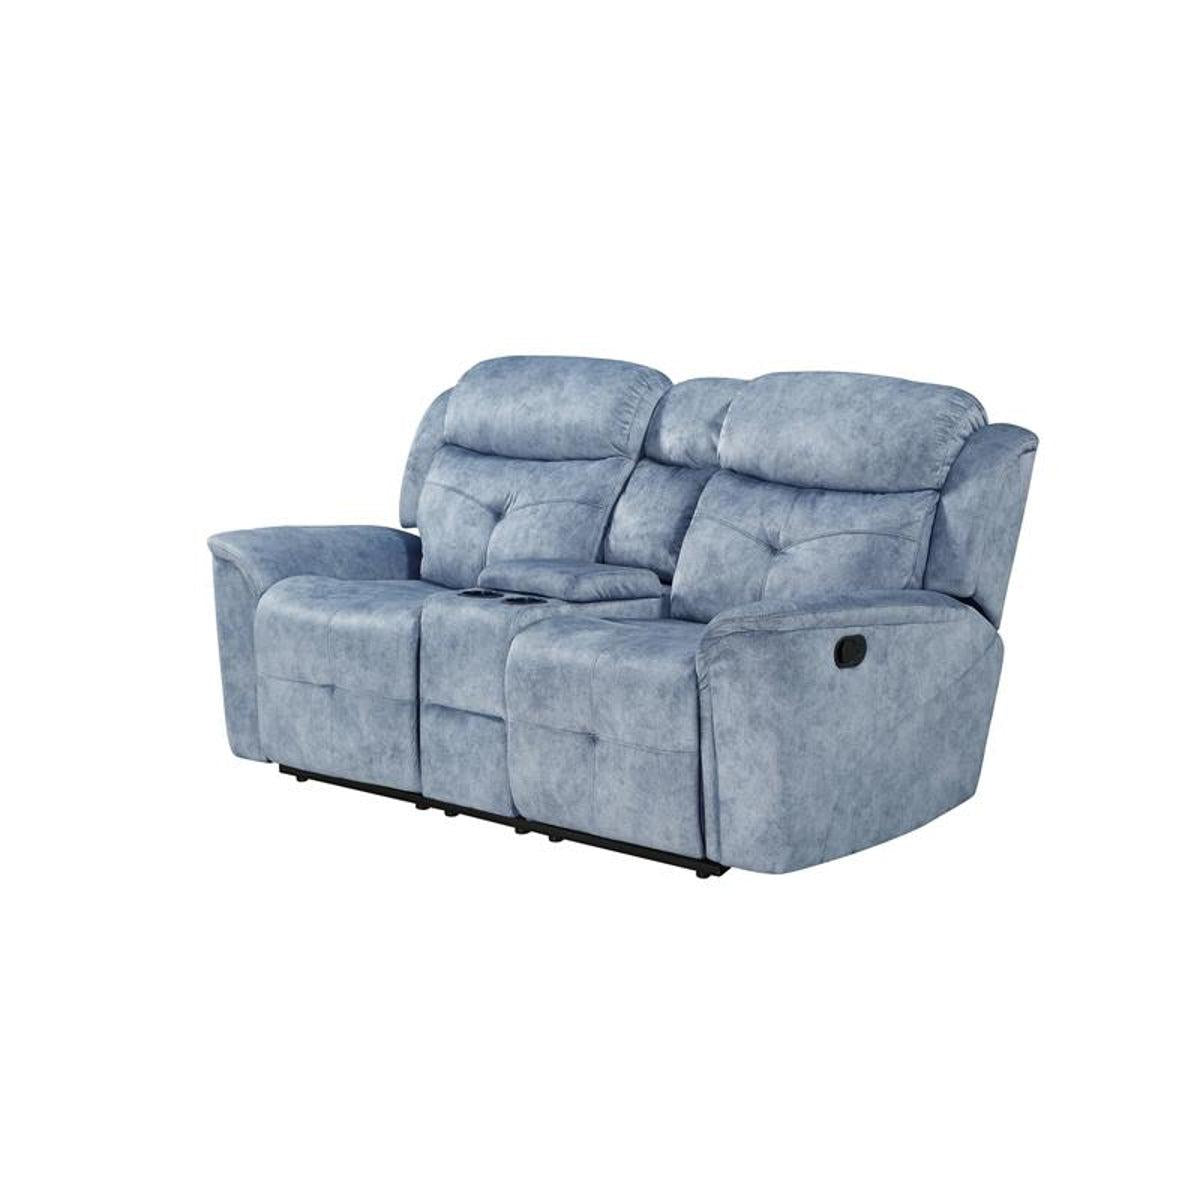 Acme Furniture Mariana Motion Loveseat in Silver Blue 55036  Half Price Furniture